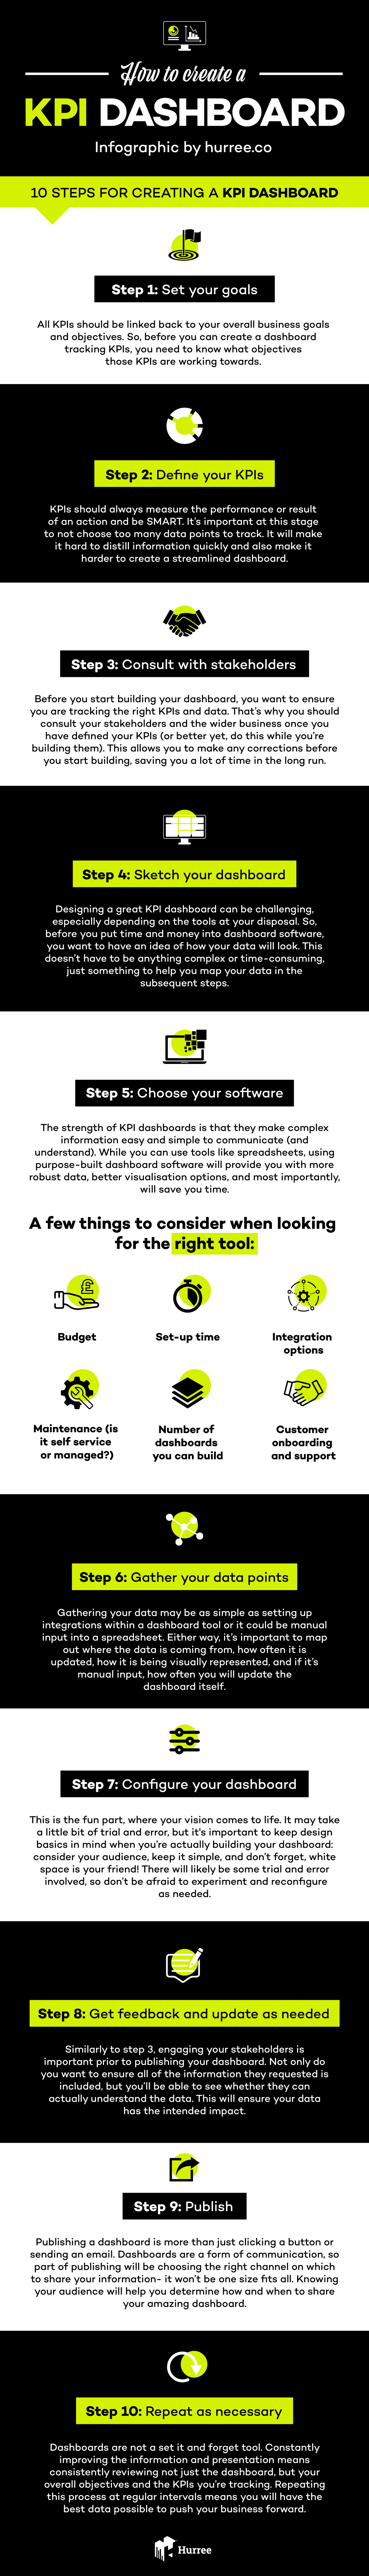 Hurree KPI Dashboard Infographic